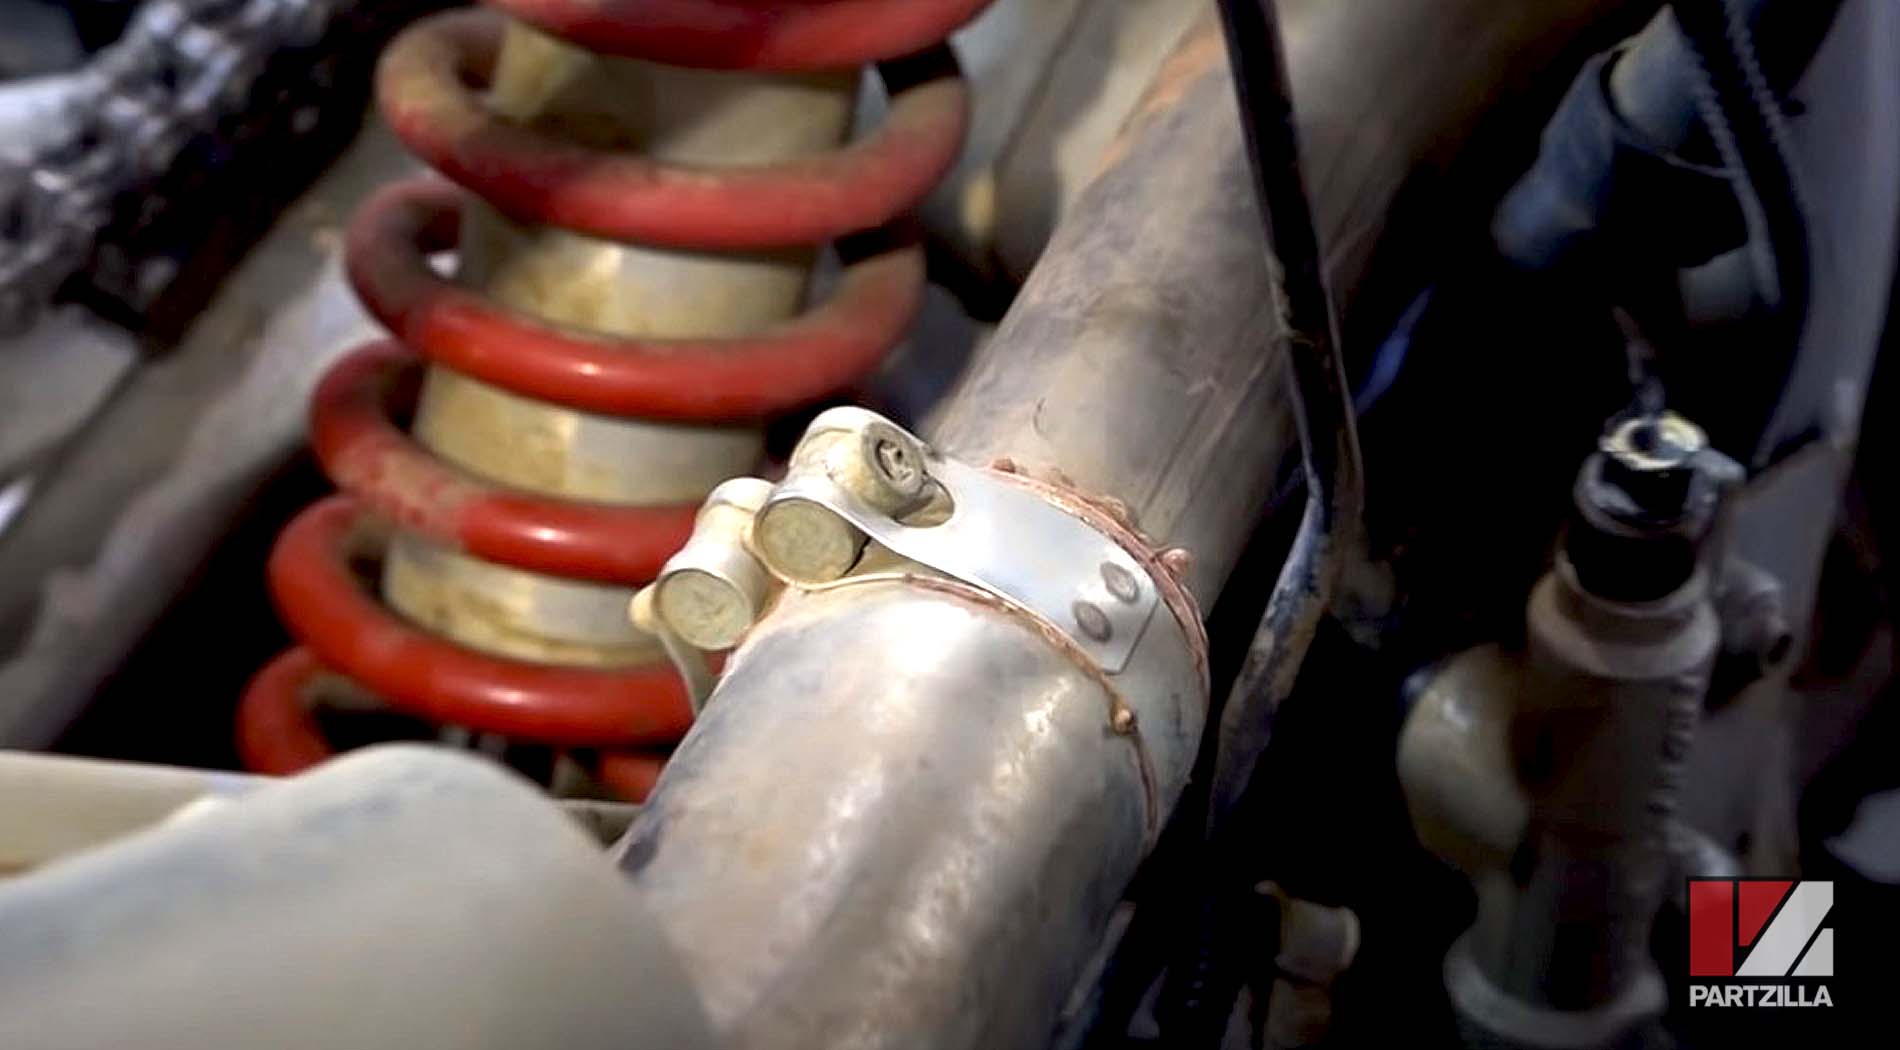 Honda TRX400 top end engine rebuild exhaust installation